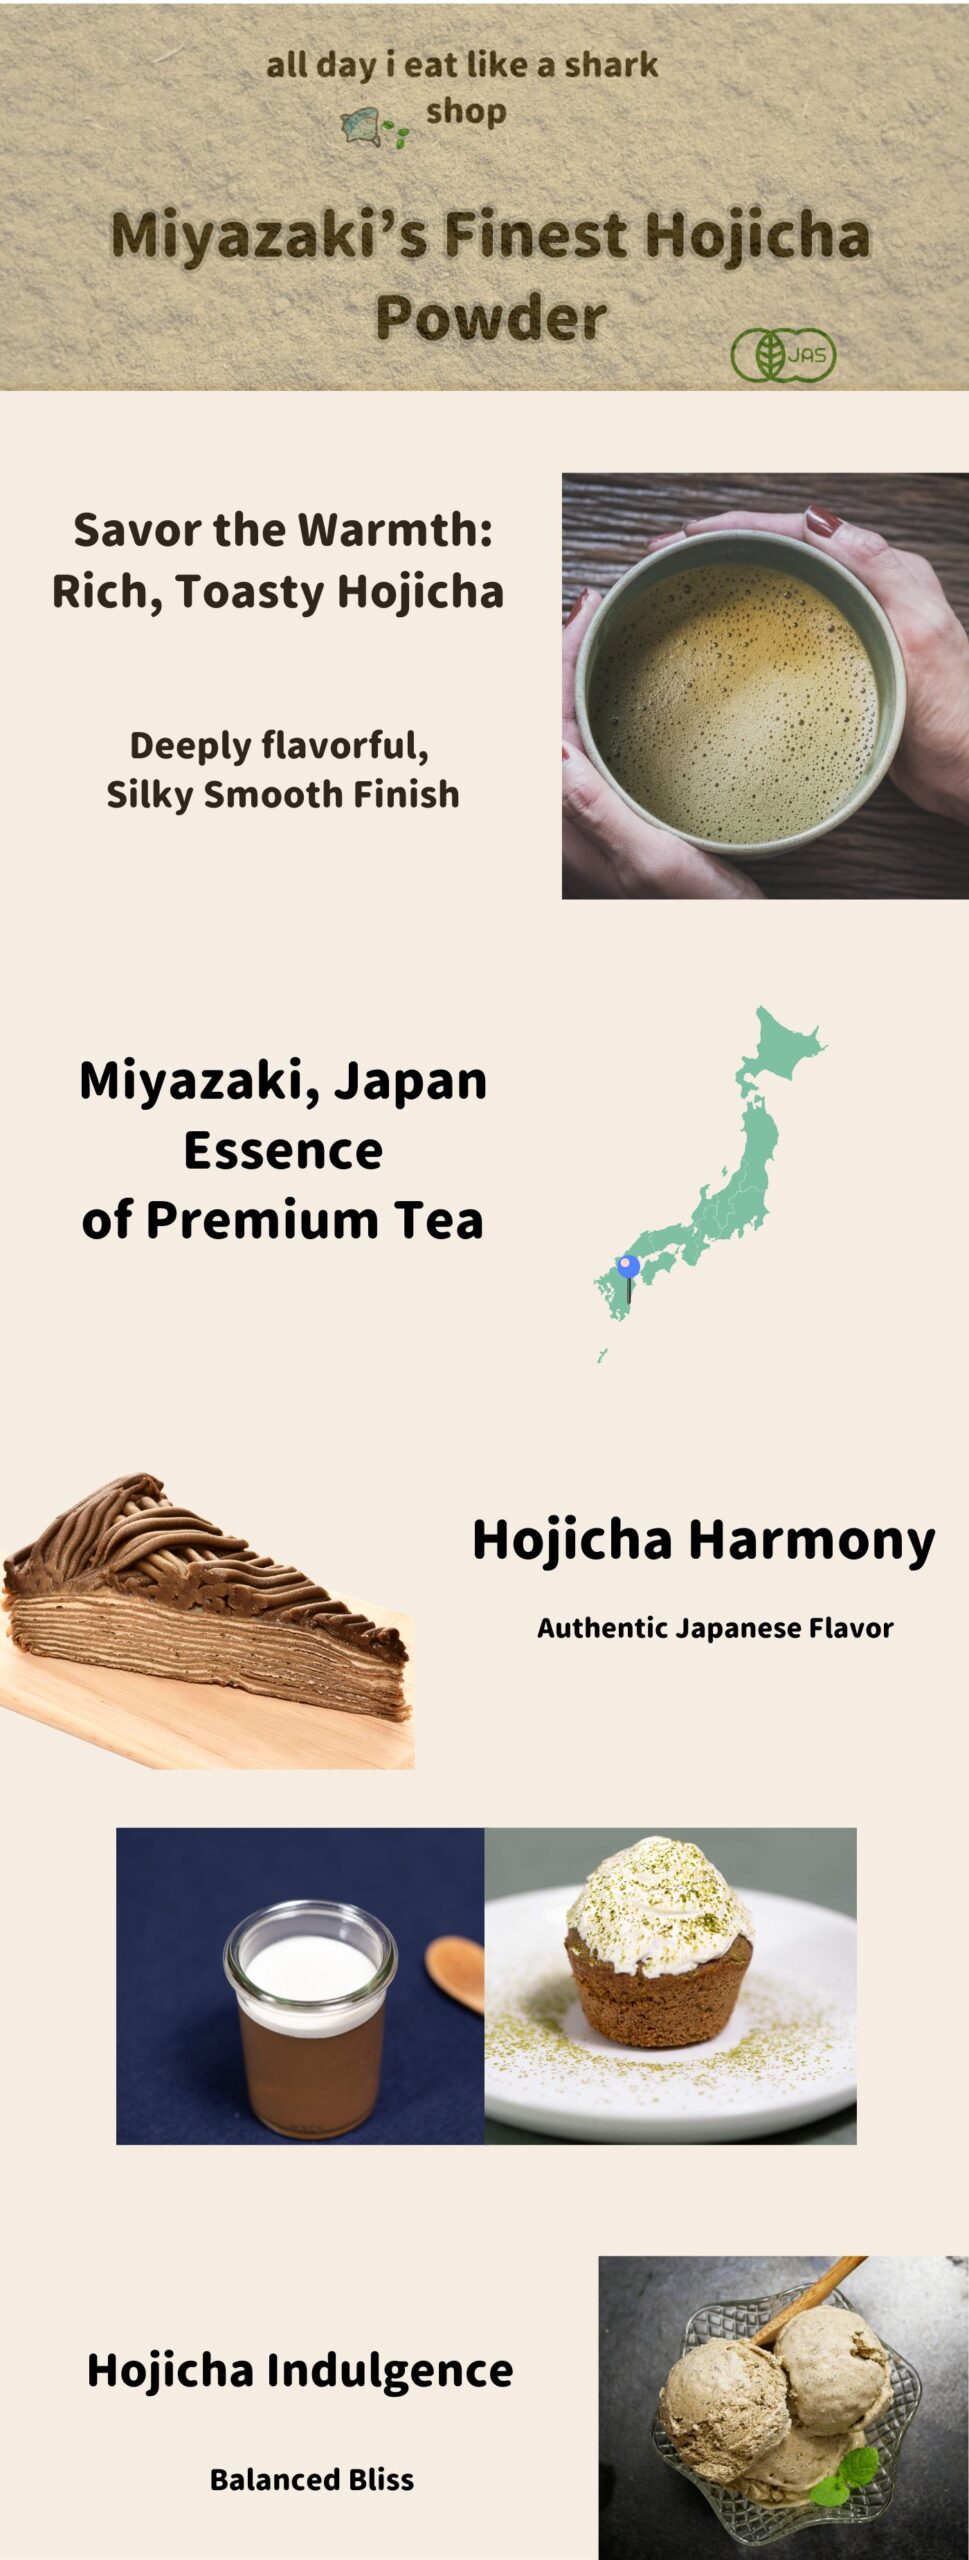 Miyazaki’s Finest Hojicha Powder infographic